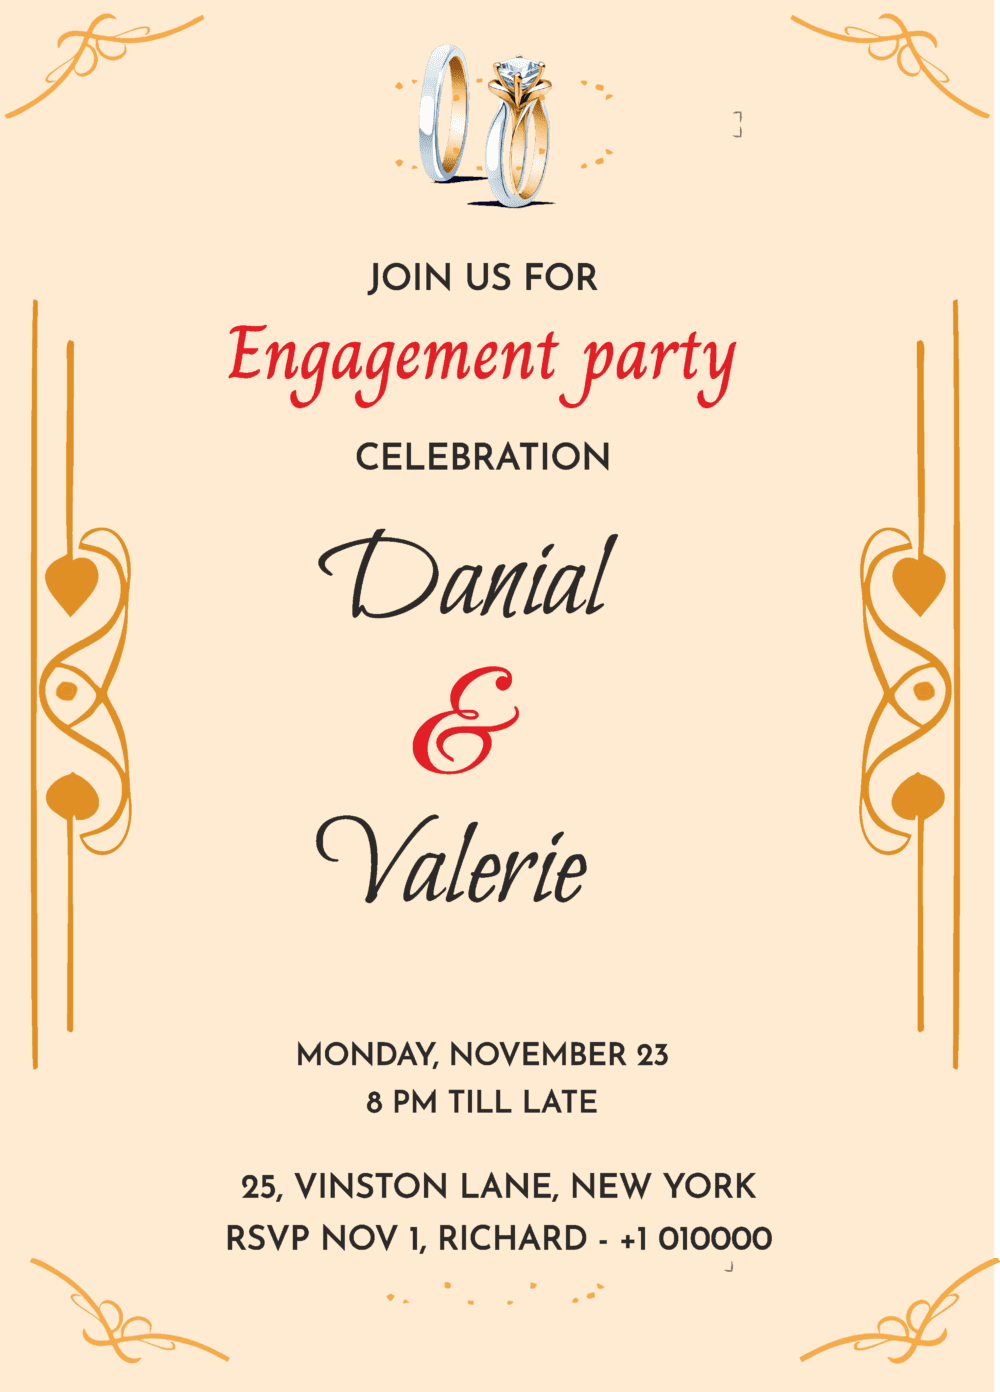 Engagement digital invitation card design No. 344. -  www.victoryinvitations.com